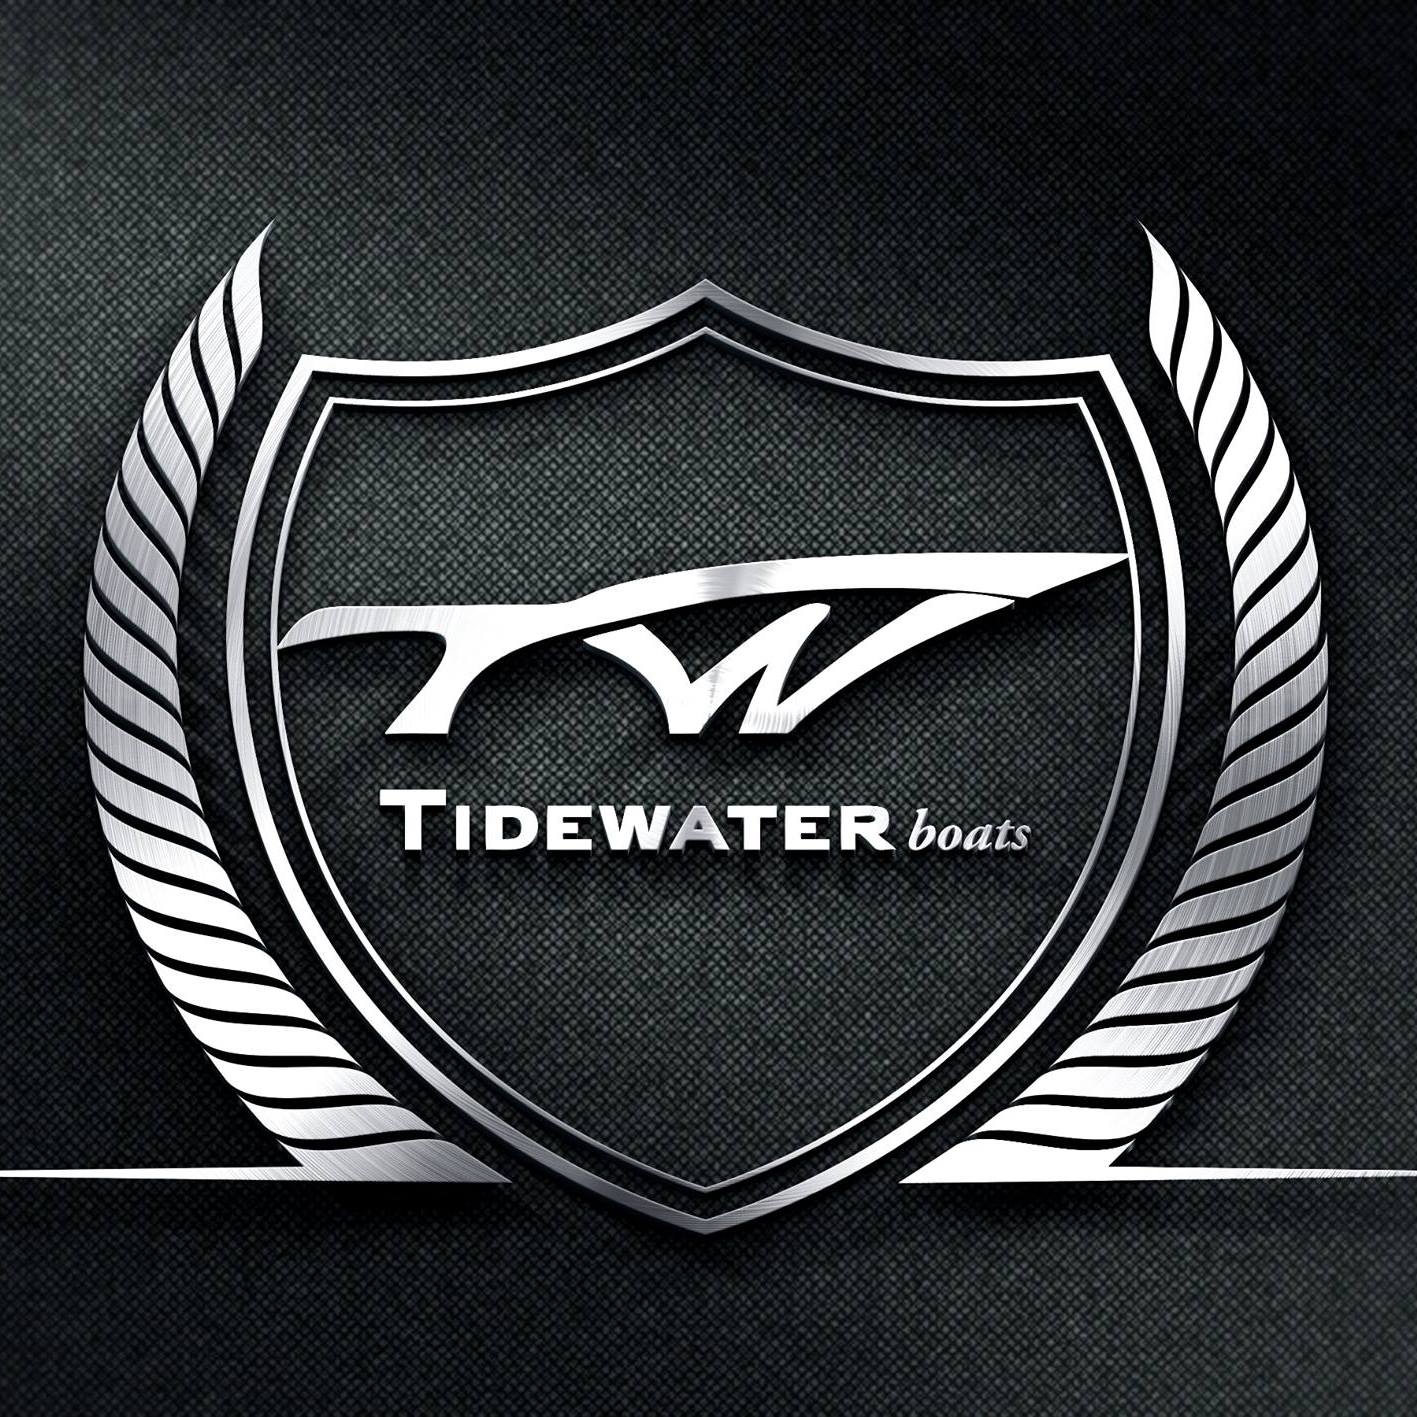 Tidewater logo